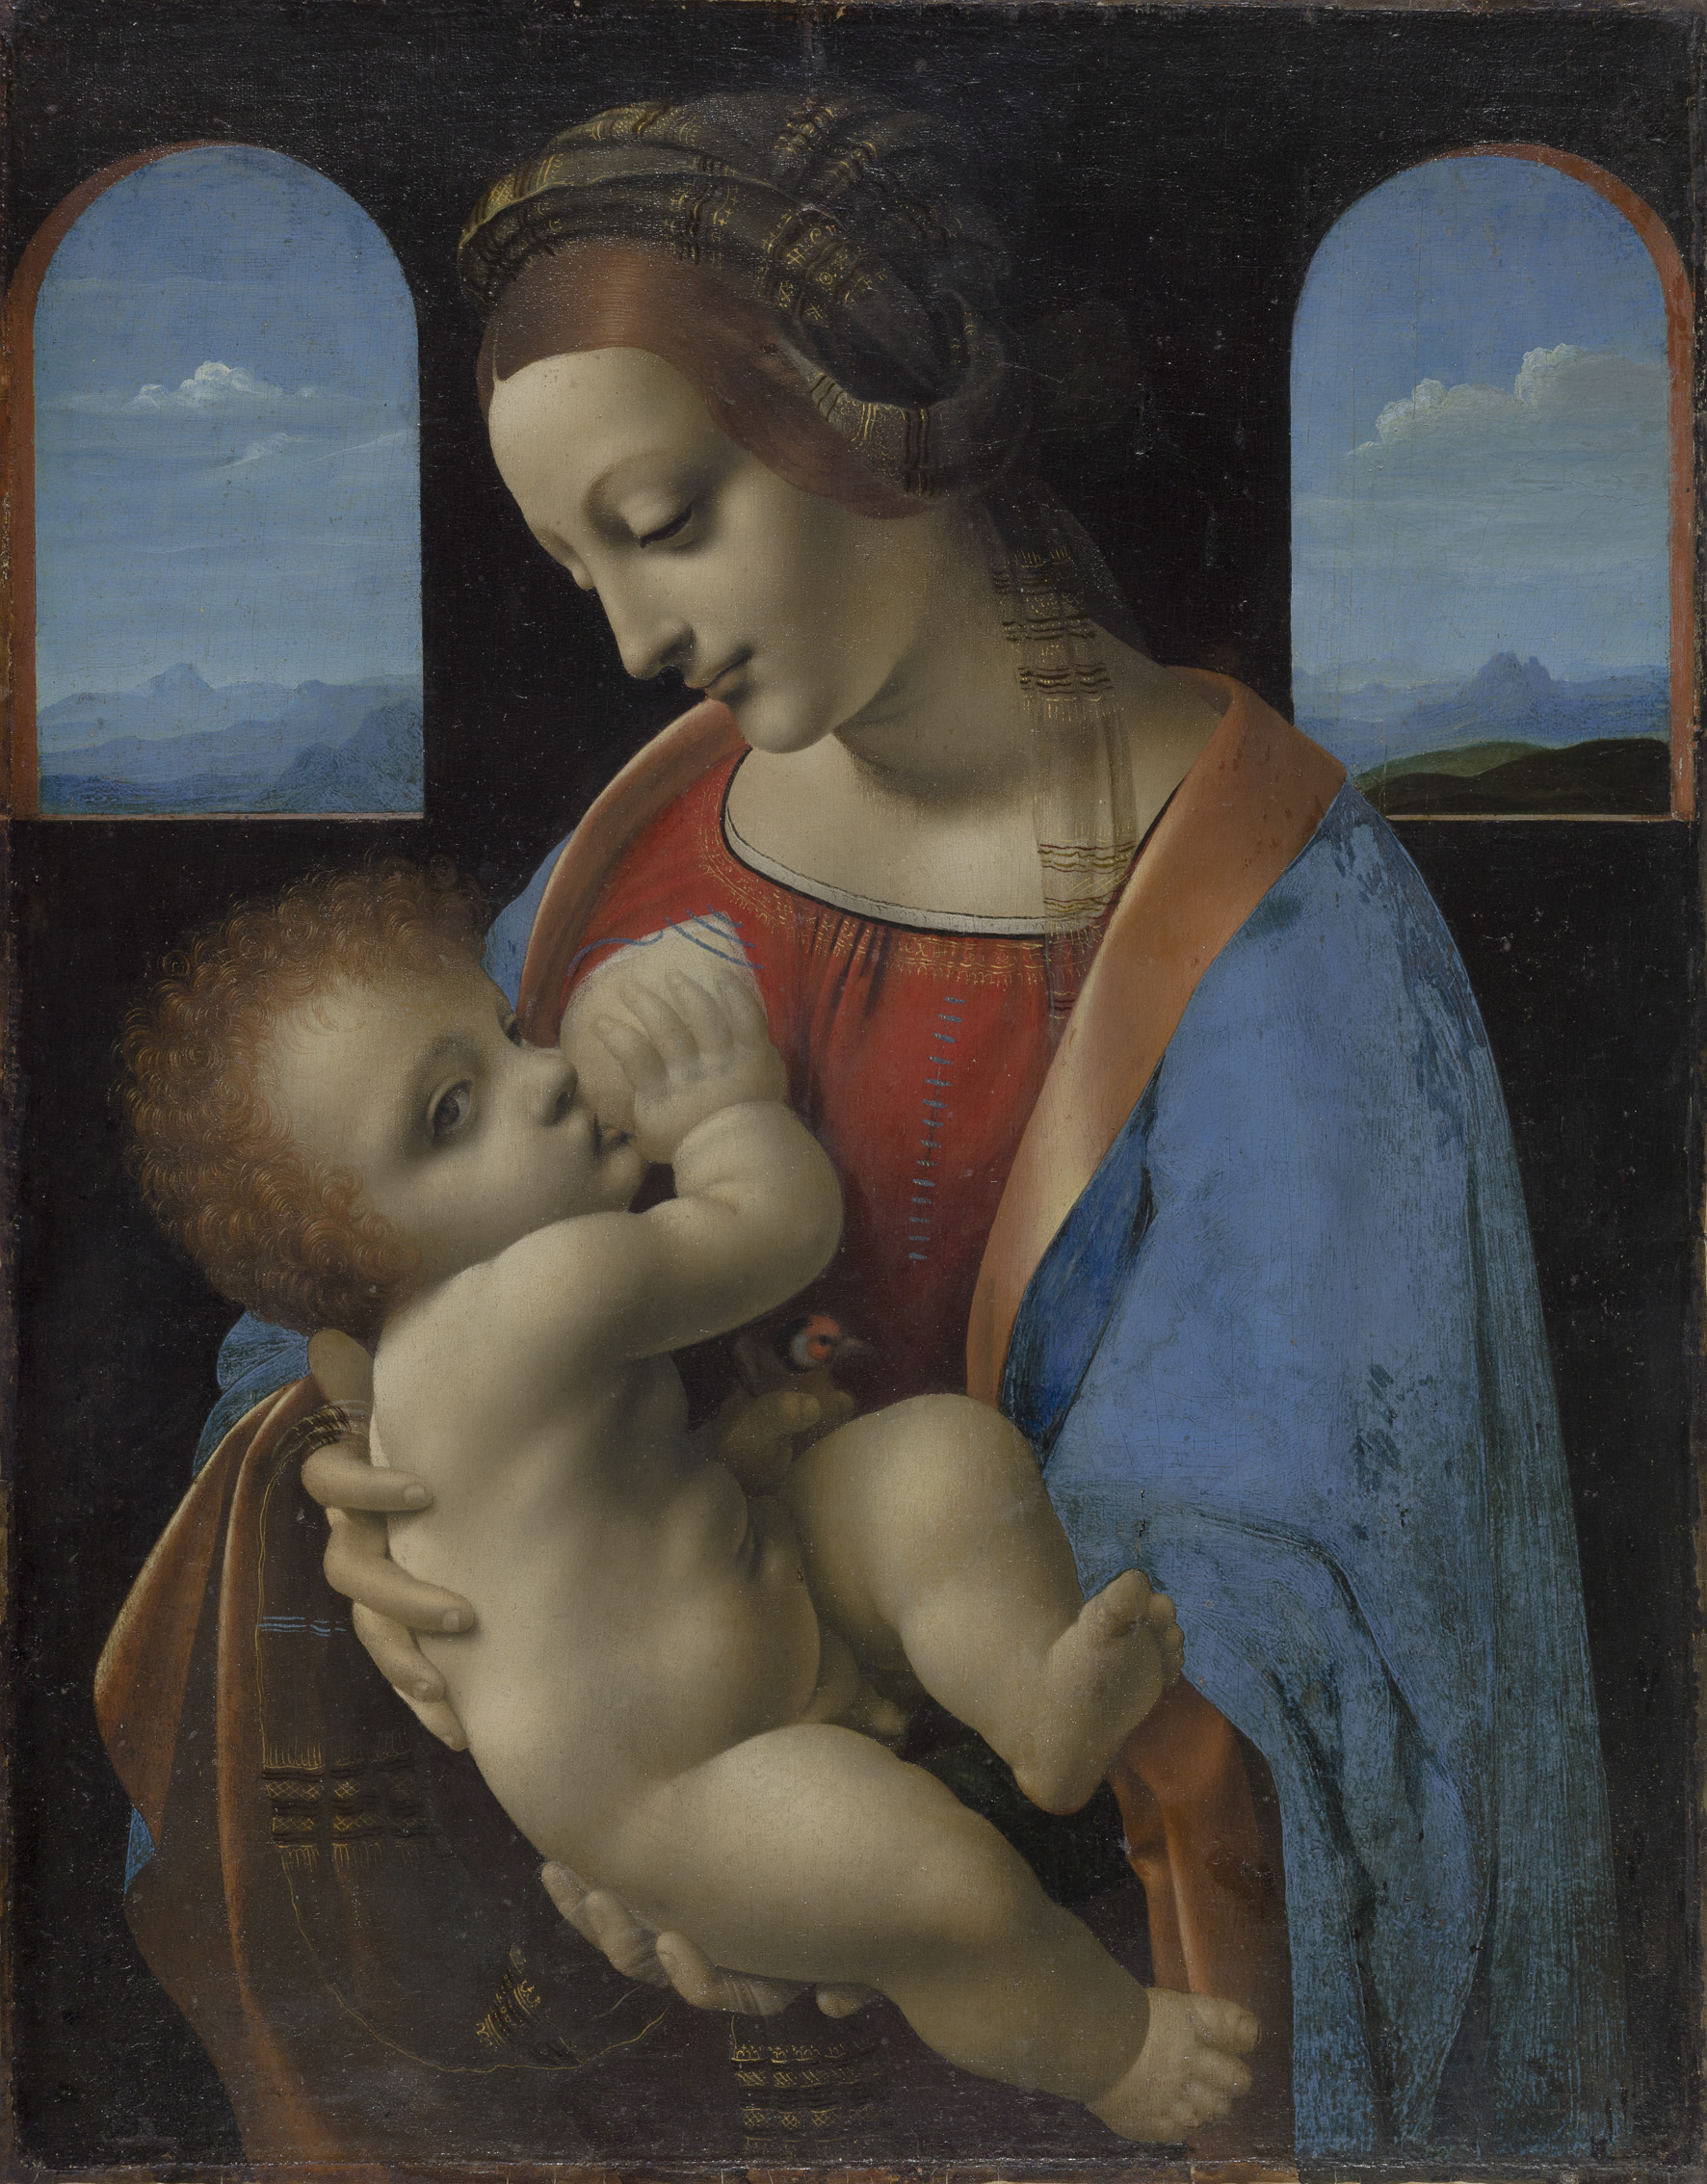 मैडोना लिटा by Leonardo da Vinci - c. १४९०  